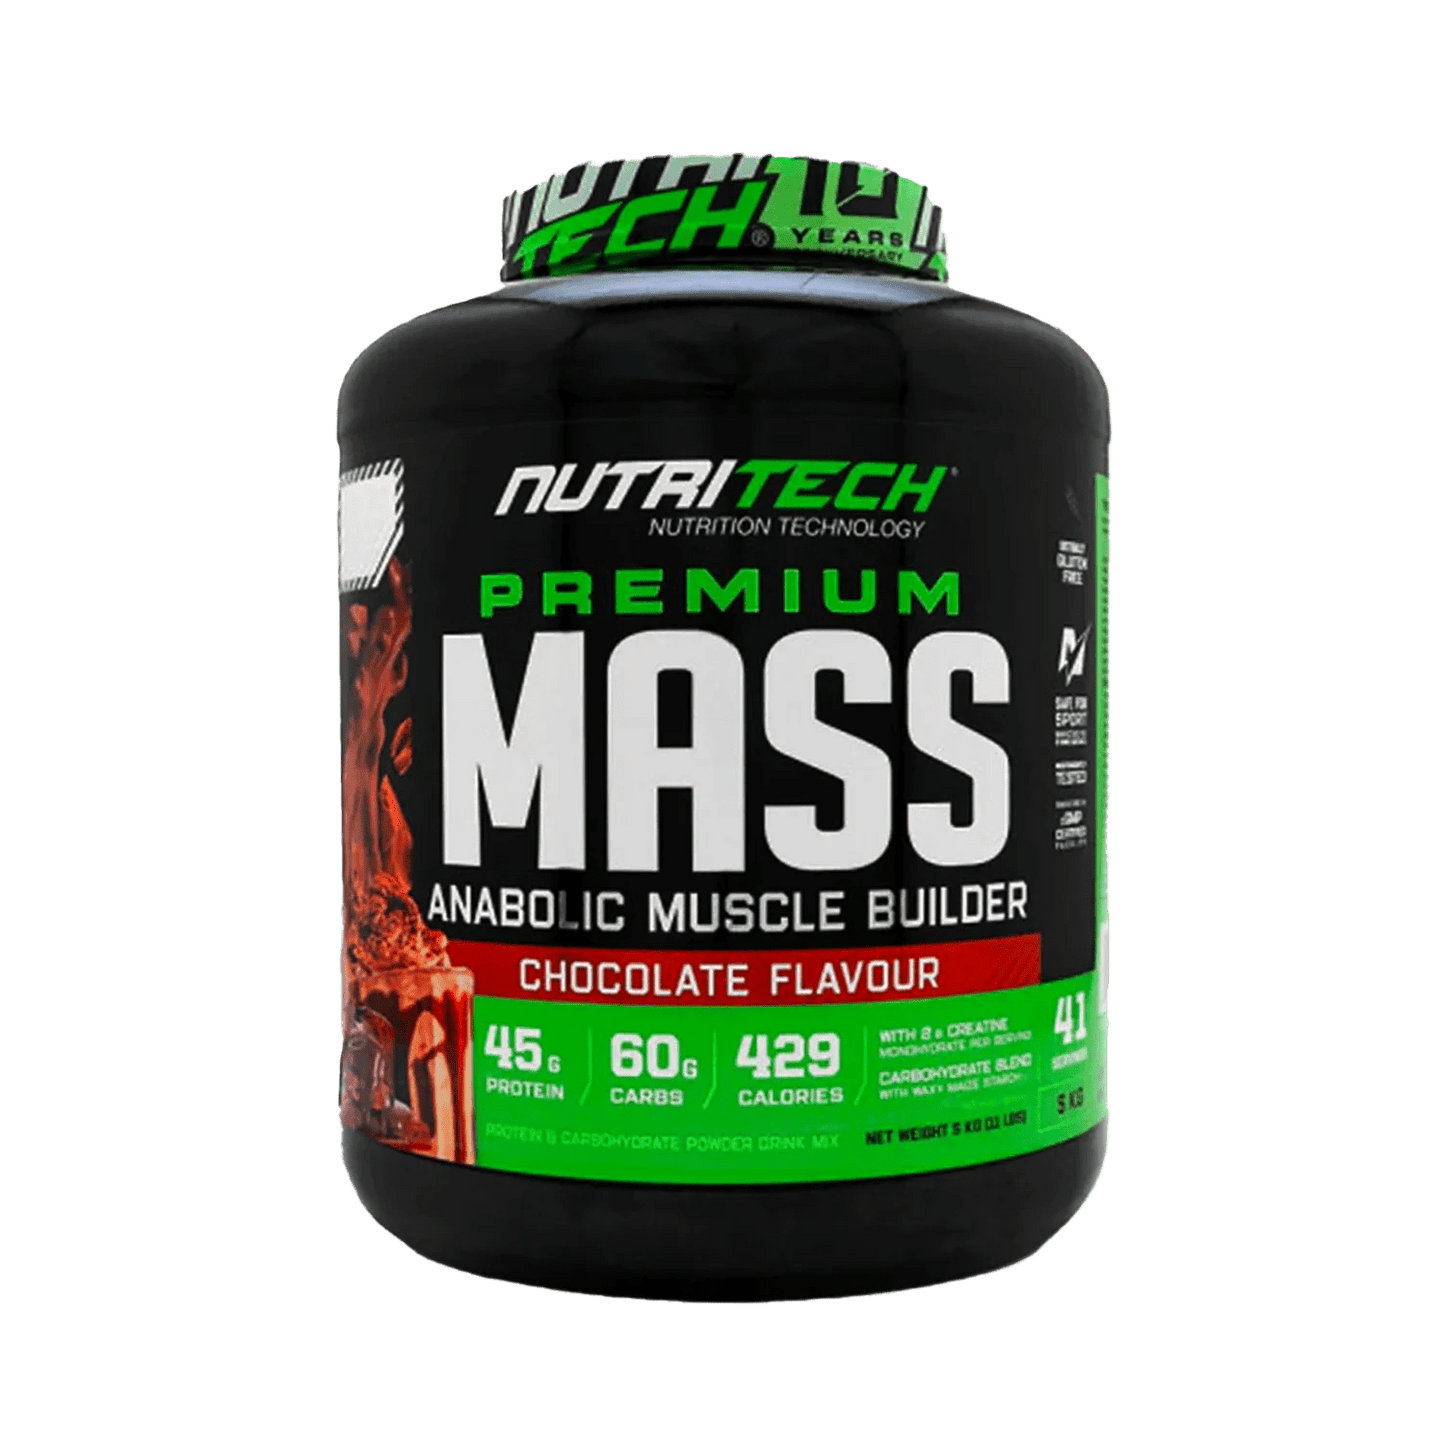 Nutritech Premium Mass Anabolic Muscle Builder Protein